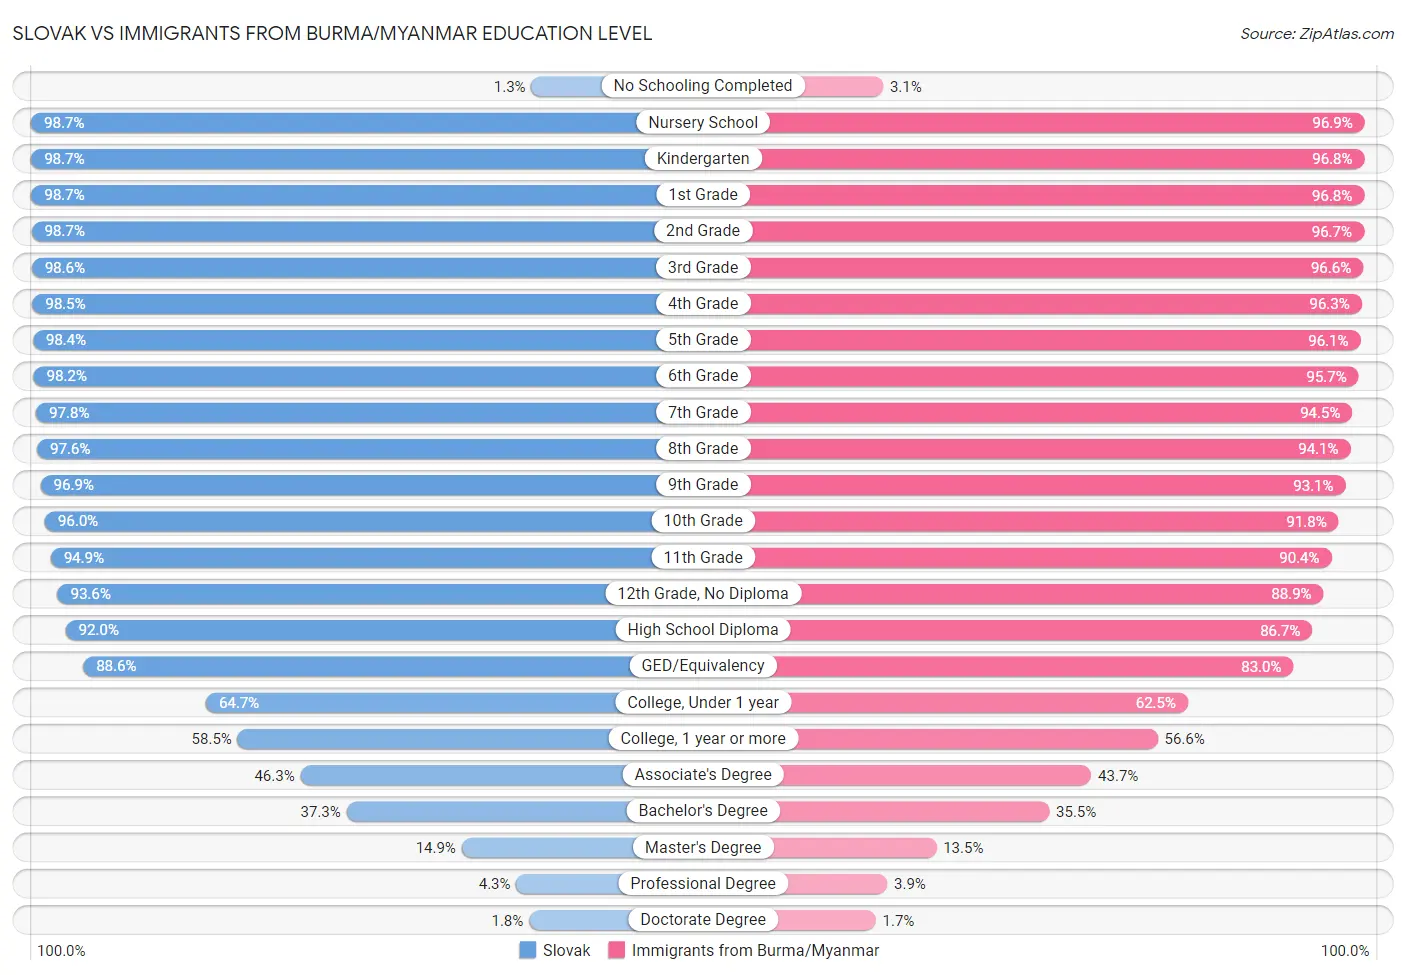 Slovak vs Immigrants from Burma/Myanmar Education Level